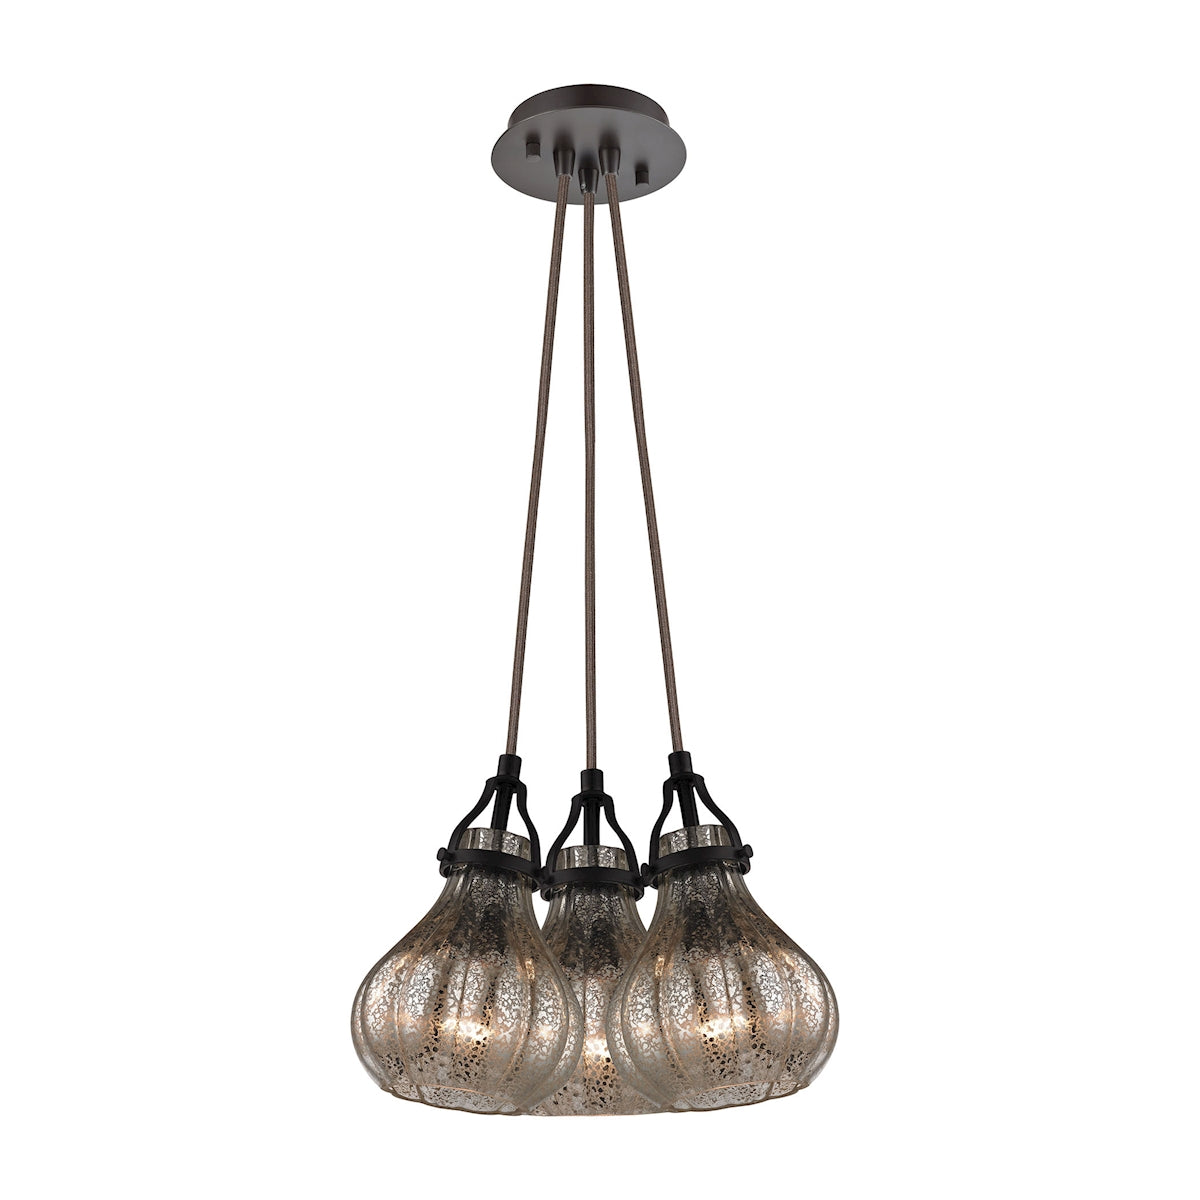 Danica 3-Light Nesting Pendant Fixture in Oil Rubbed Bronze with Mercury Glass